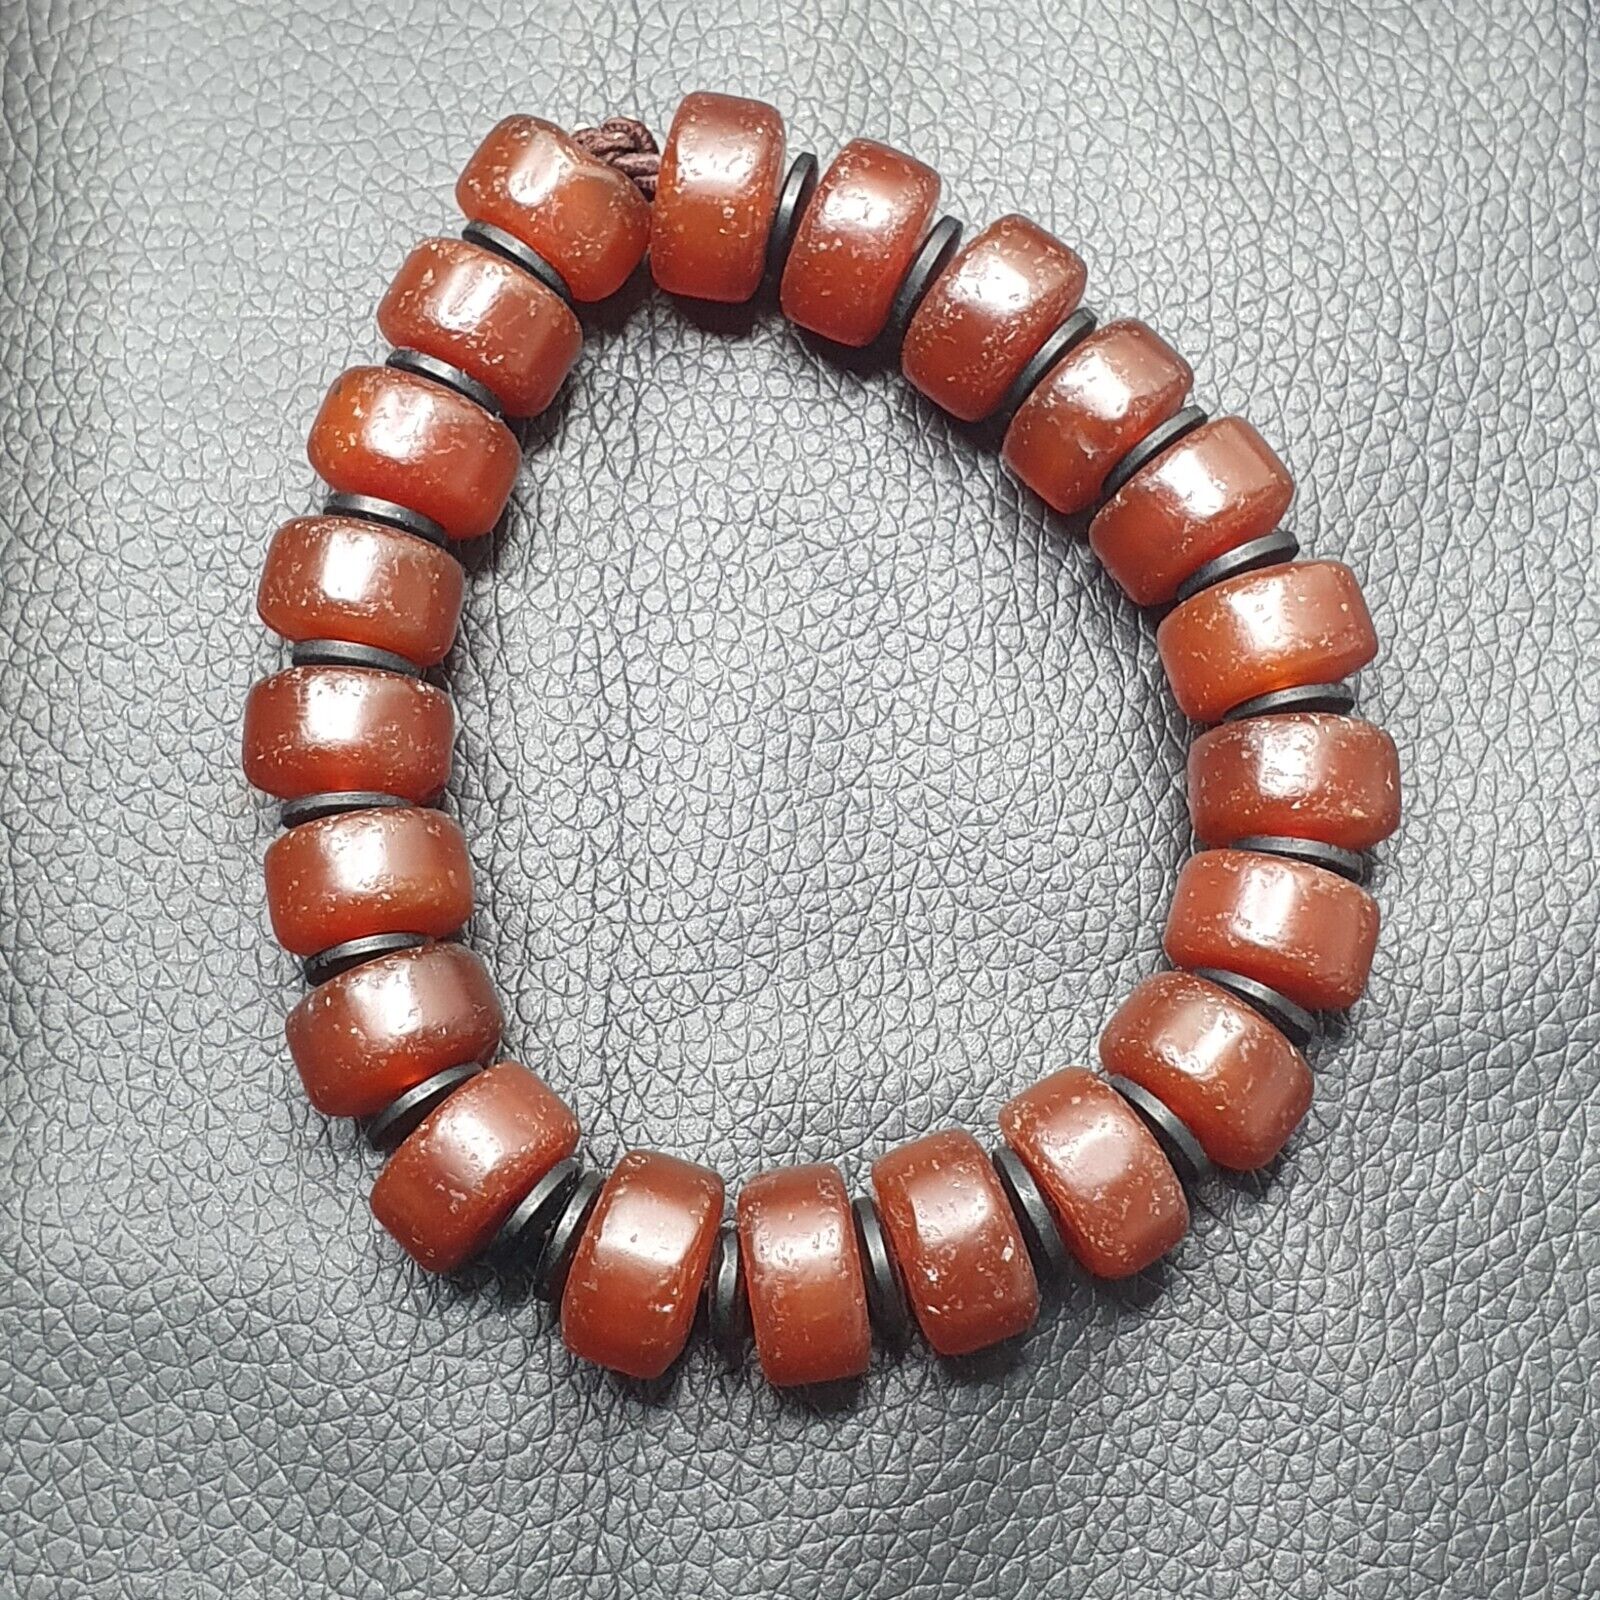 Antique Tire Shape Carnelian Agate 12mm Beads Bracelet - Vintage Style Jewelry Accessory